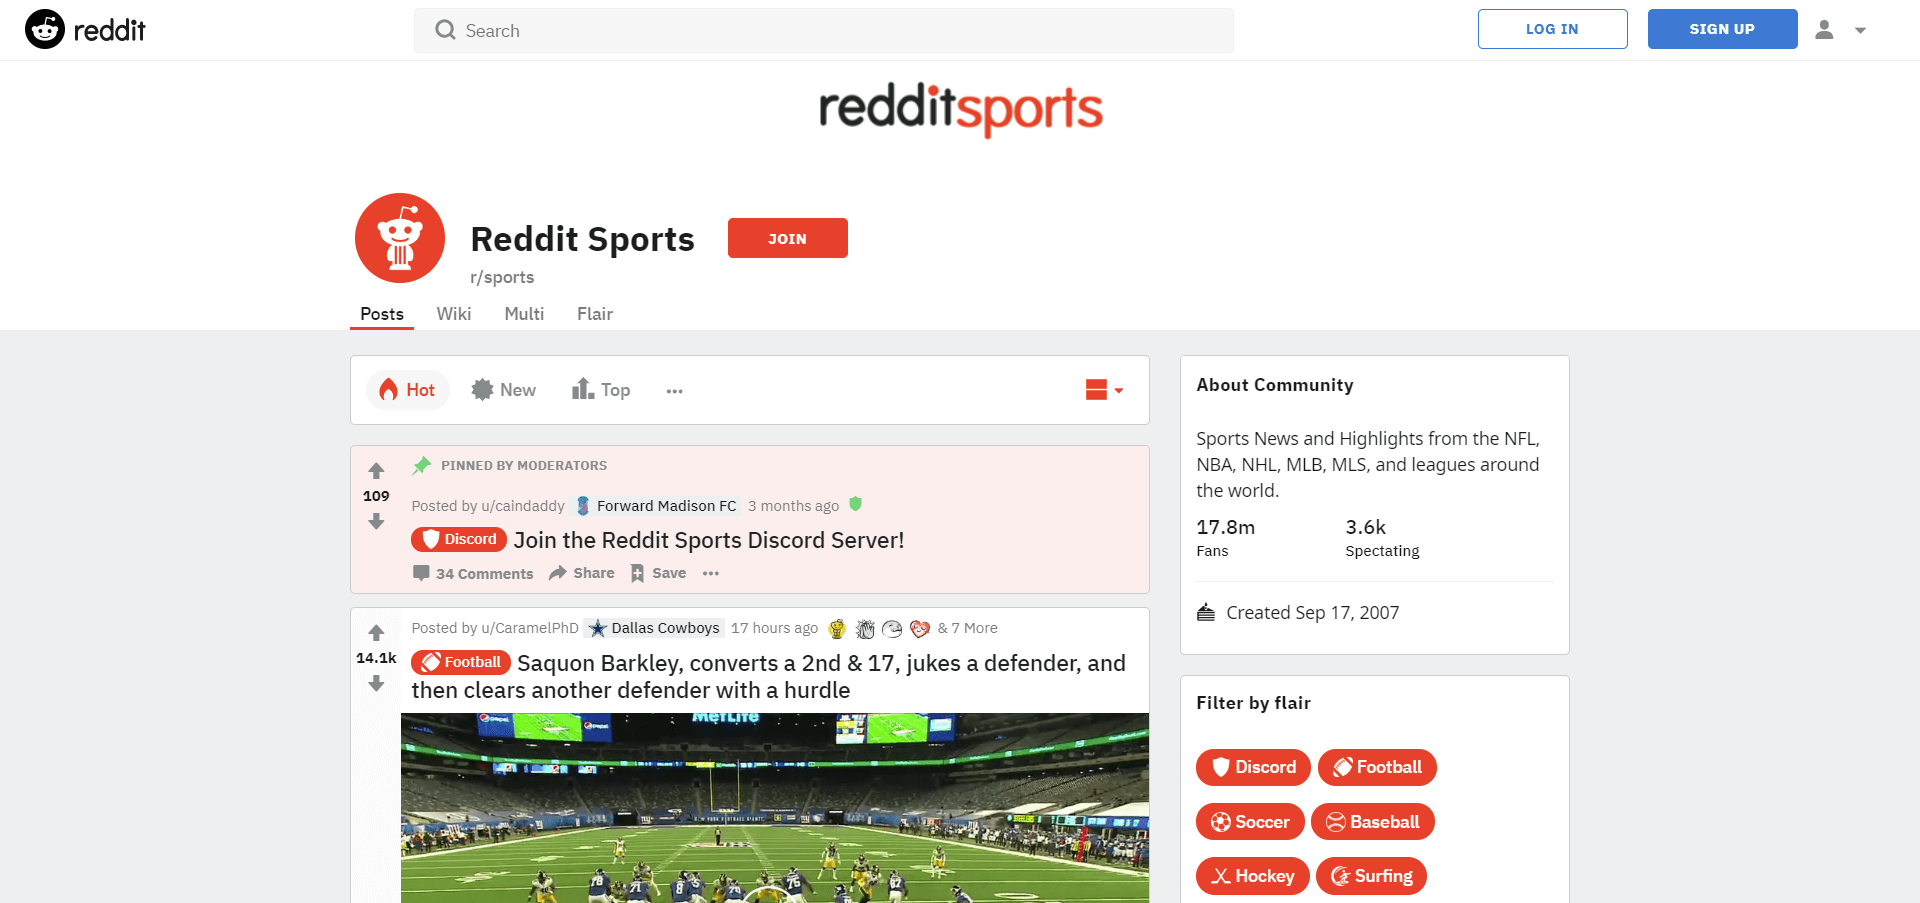 reddit sports main